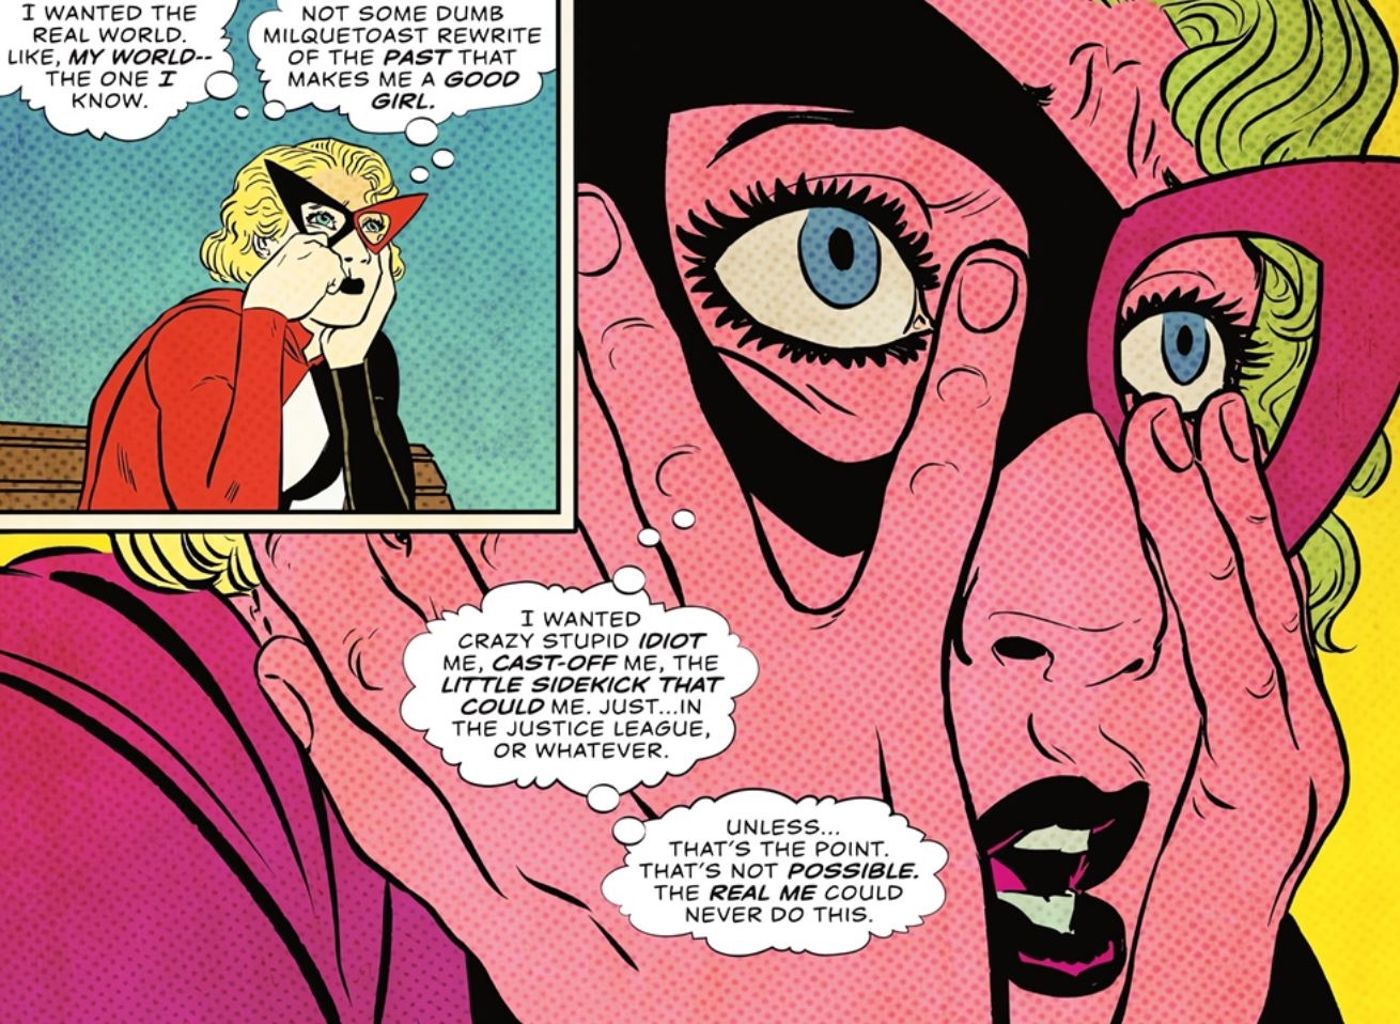 From Gotham's Wildcard to Cosmic Hero: Harley Quinn's Shocking Power Evolution Explained